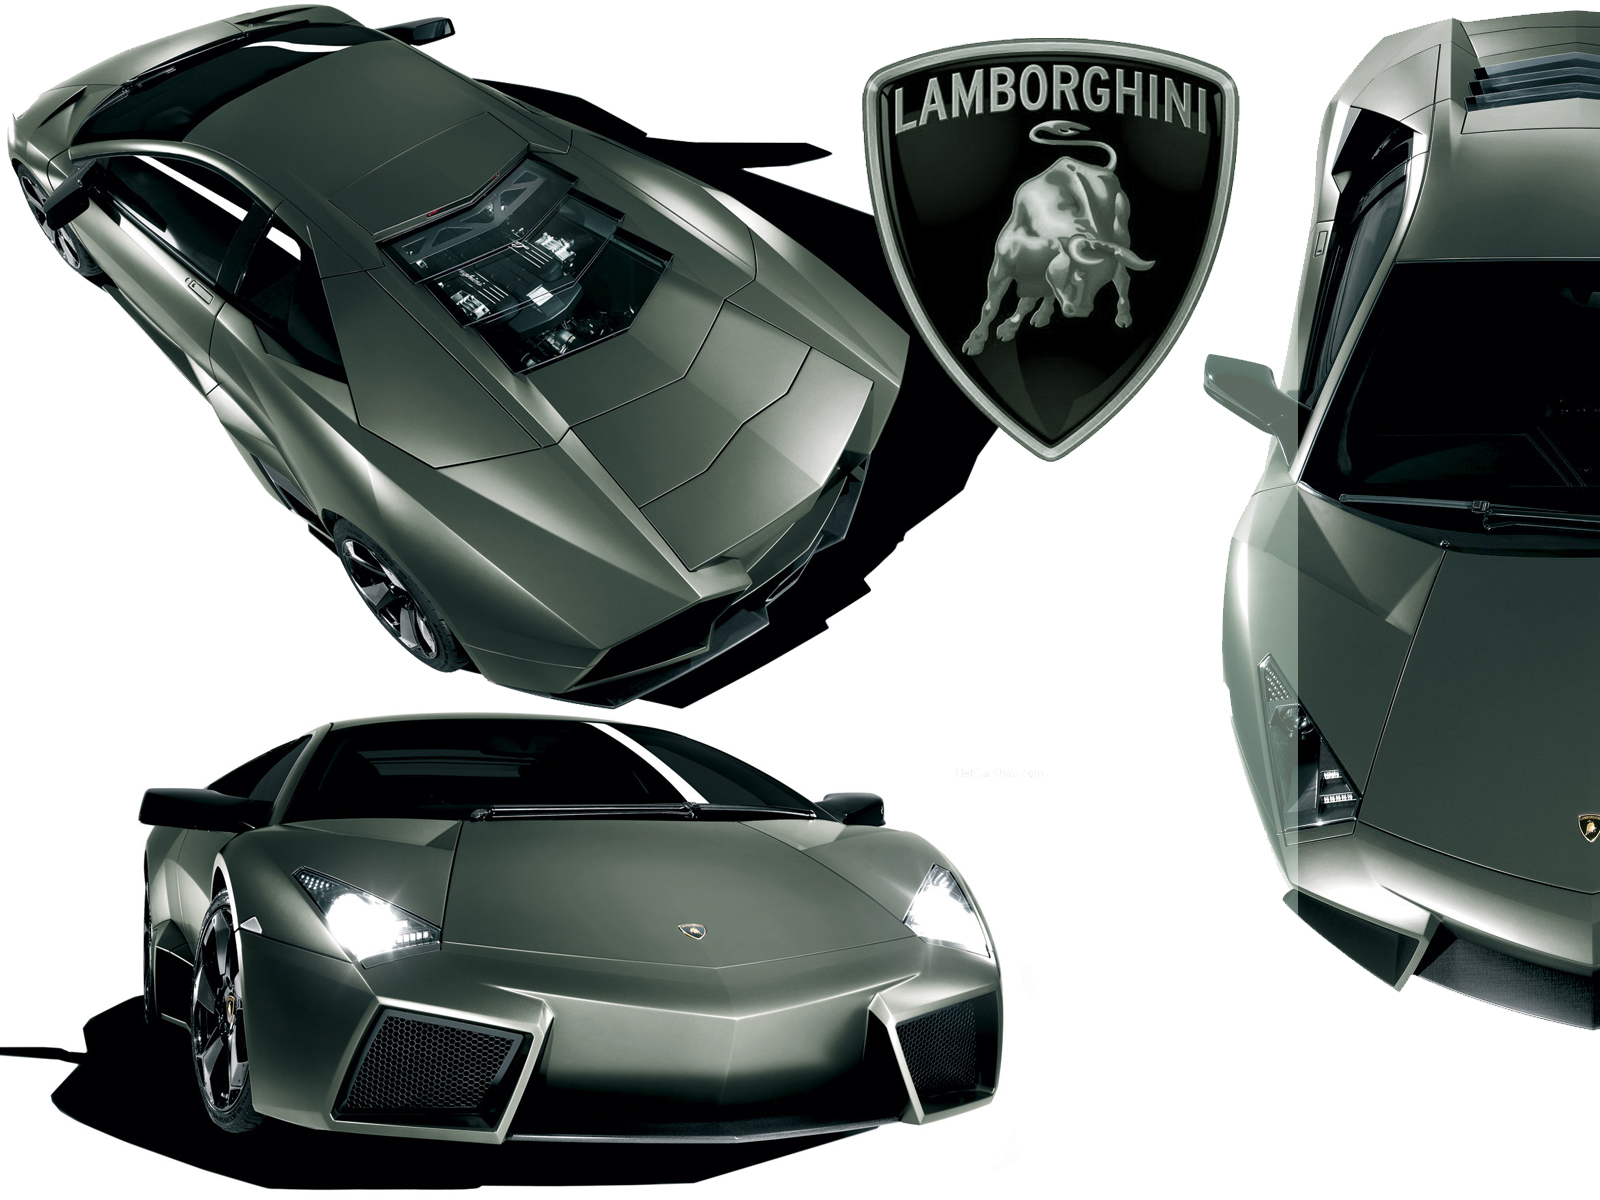 Lamborghini_Reventon_2008_1600x1200_wallpaper_by_ARIX